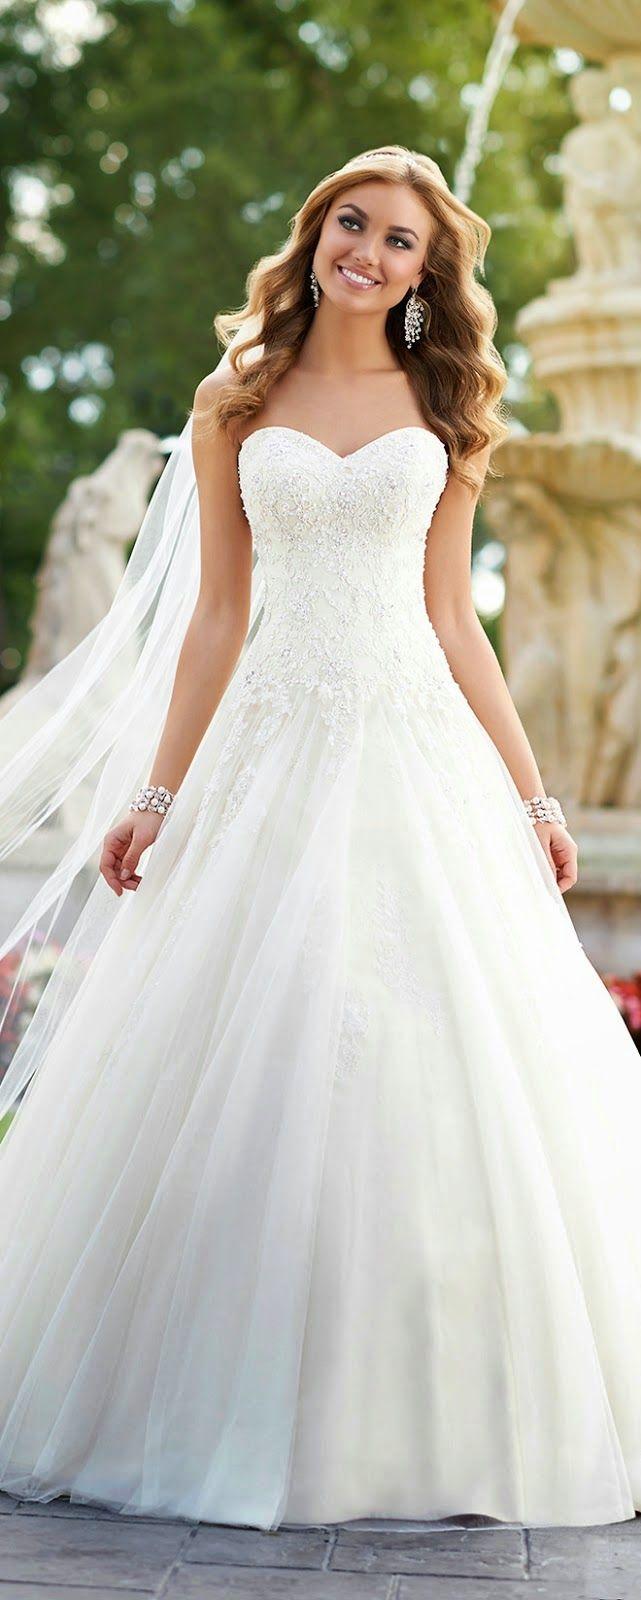 زفاف - Best Wedding Dresses Of 2014